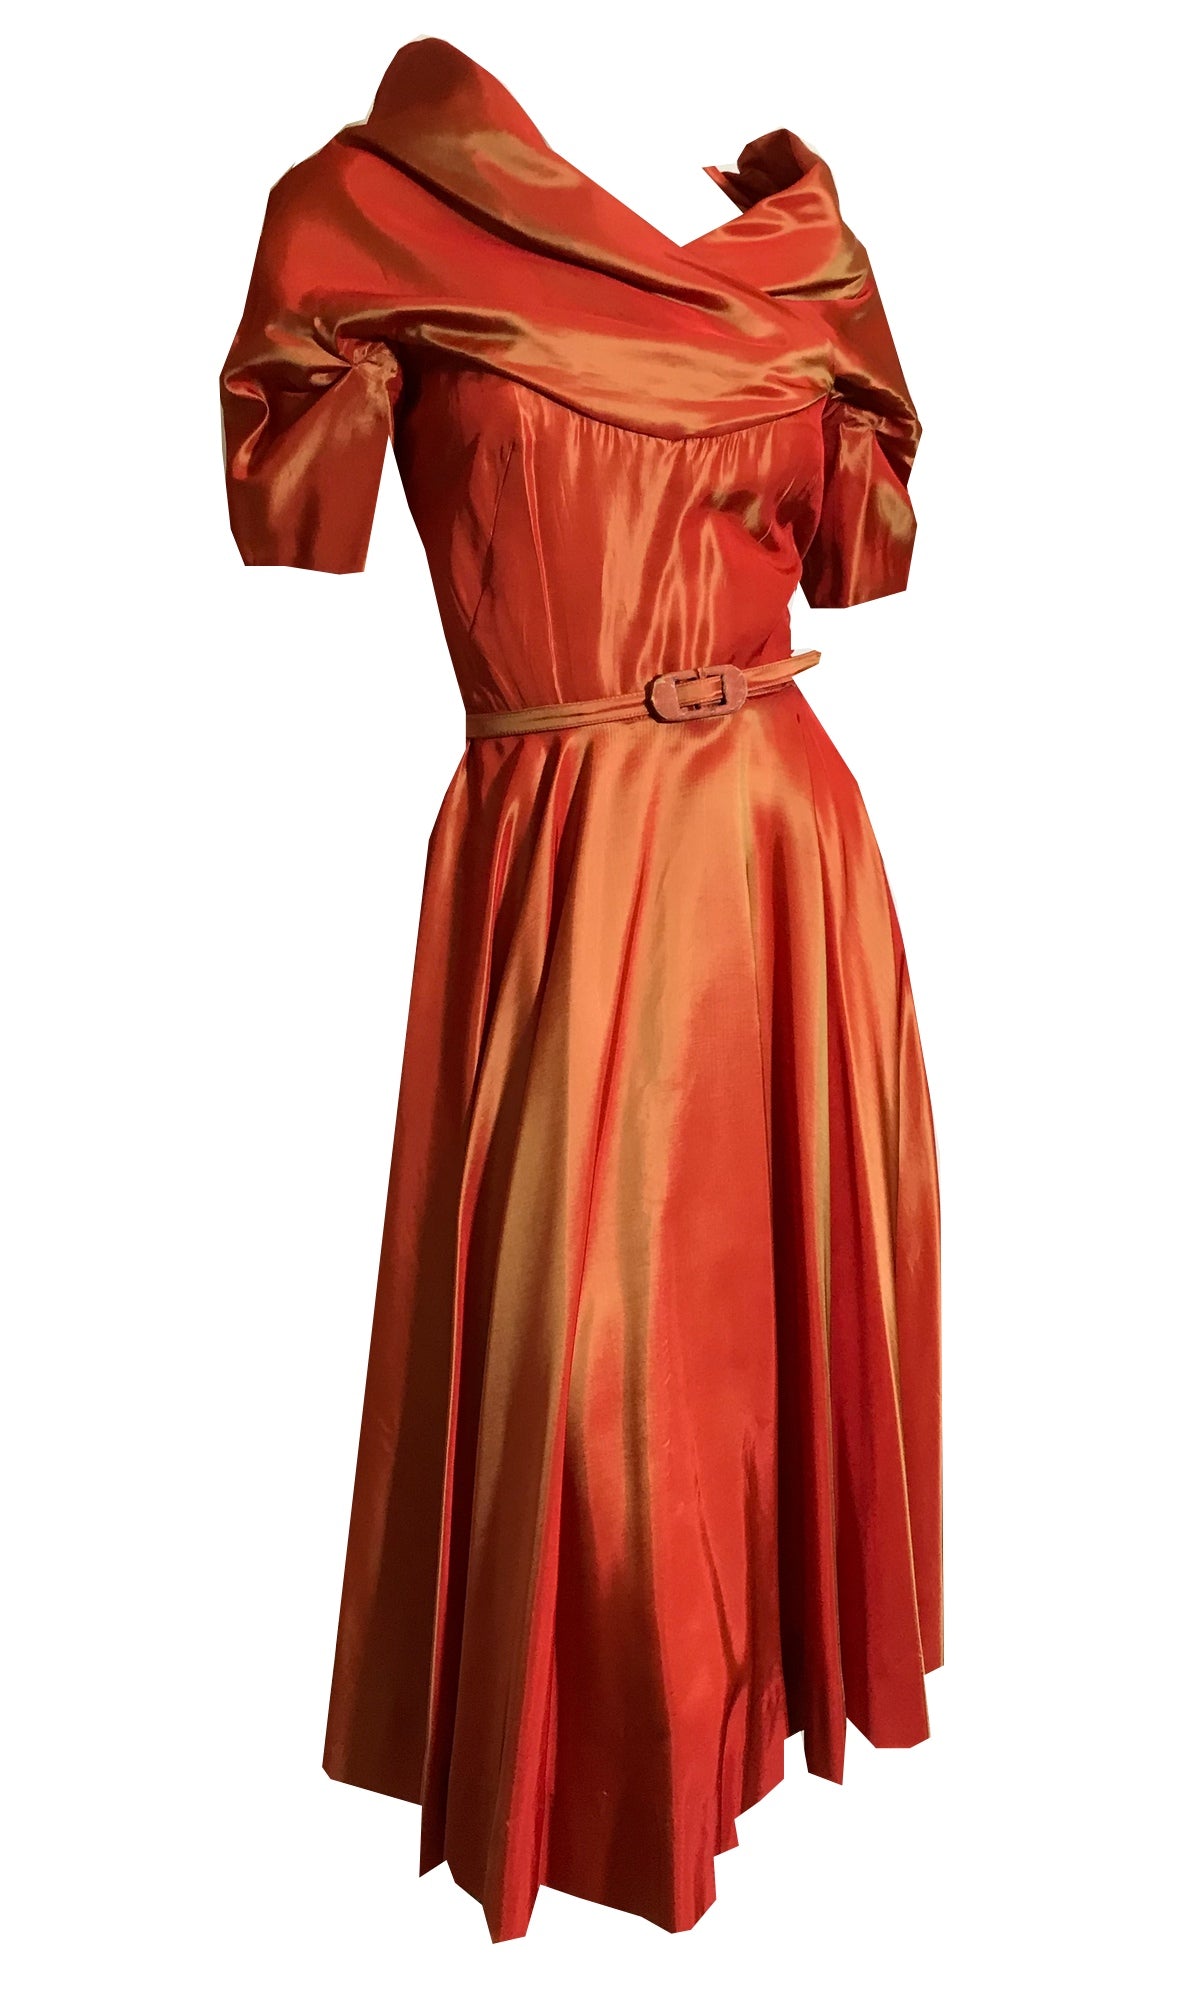 RESERVED Iridescent Tangerine Silk Taffeta Full Skirt Cocktail Dress circa 1940s